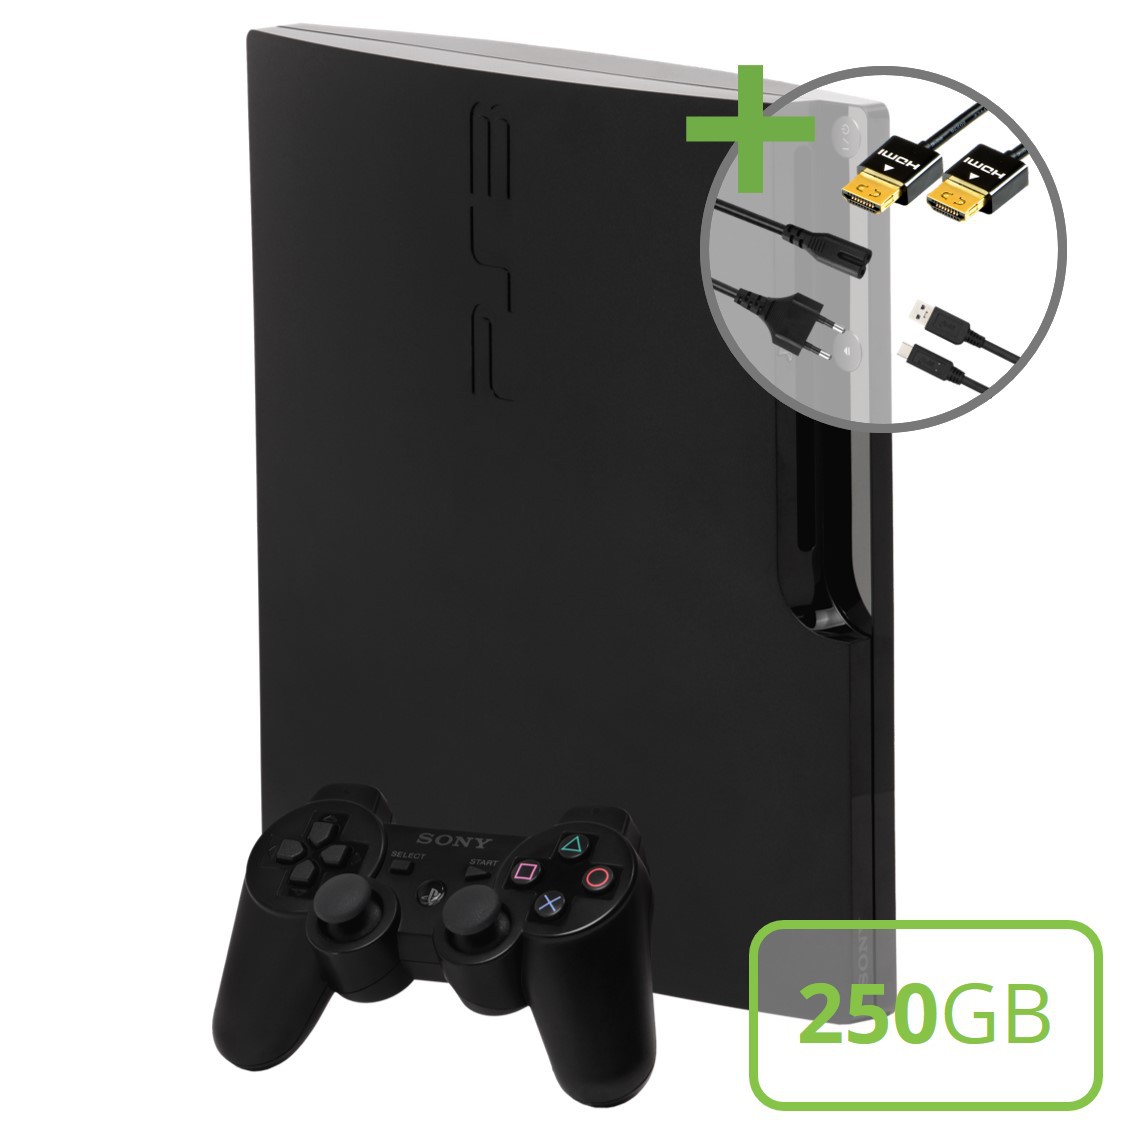 Sony PlayStation 3 Slim (250GB) Starter Pack - DualShock Edition - Playstation 3 Hardware - 2